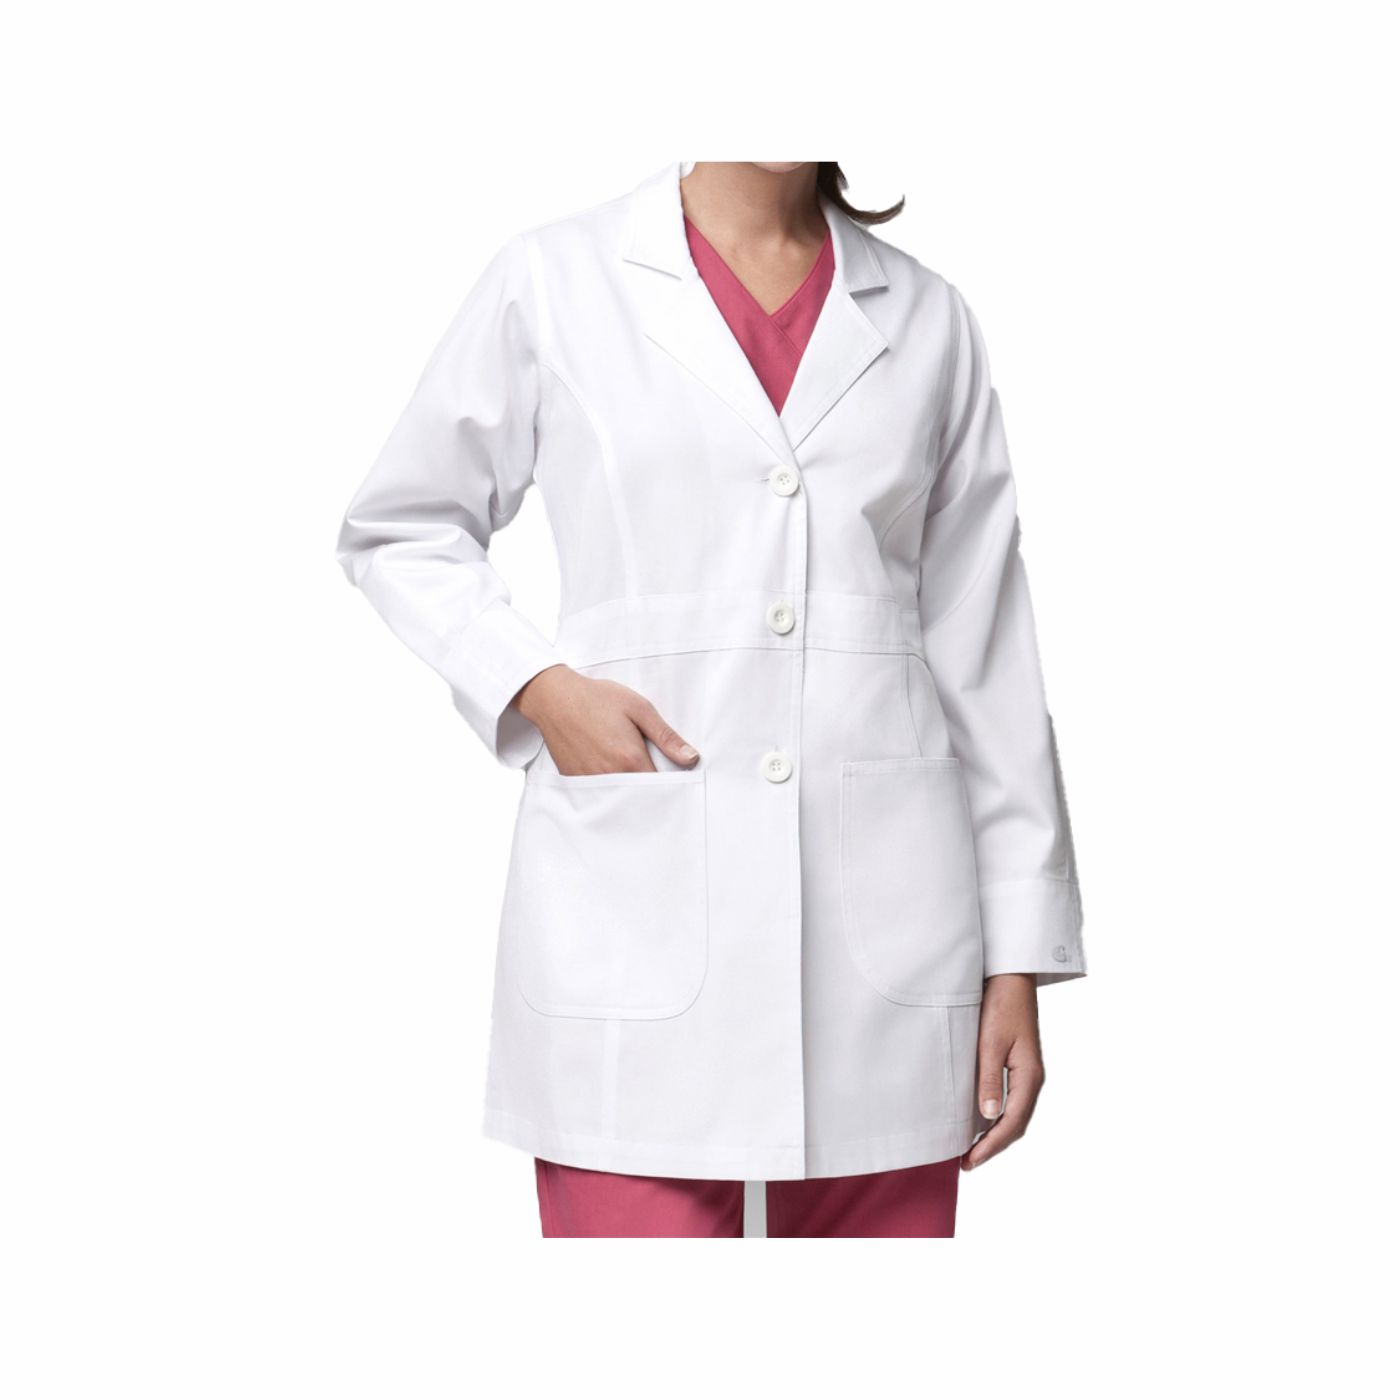 Doctor lab coat